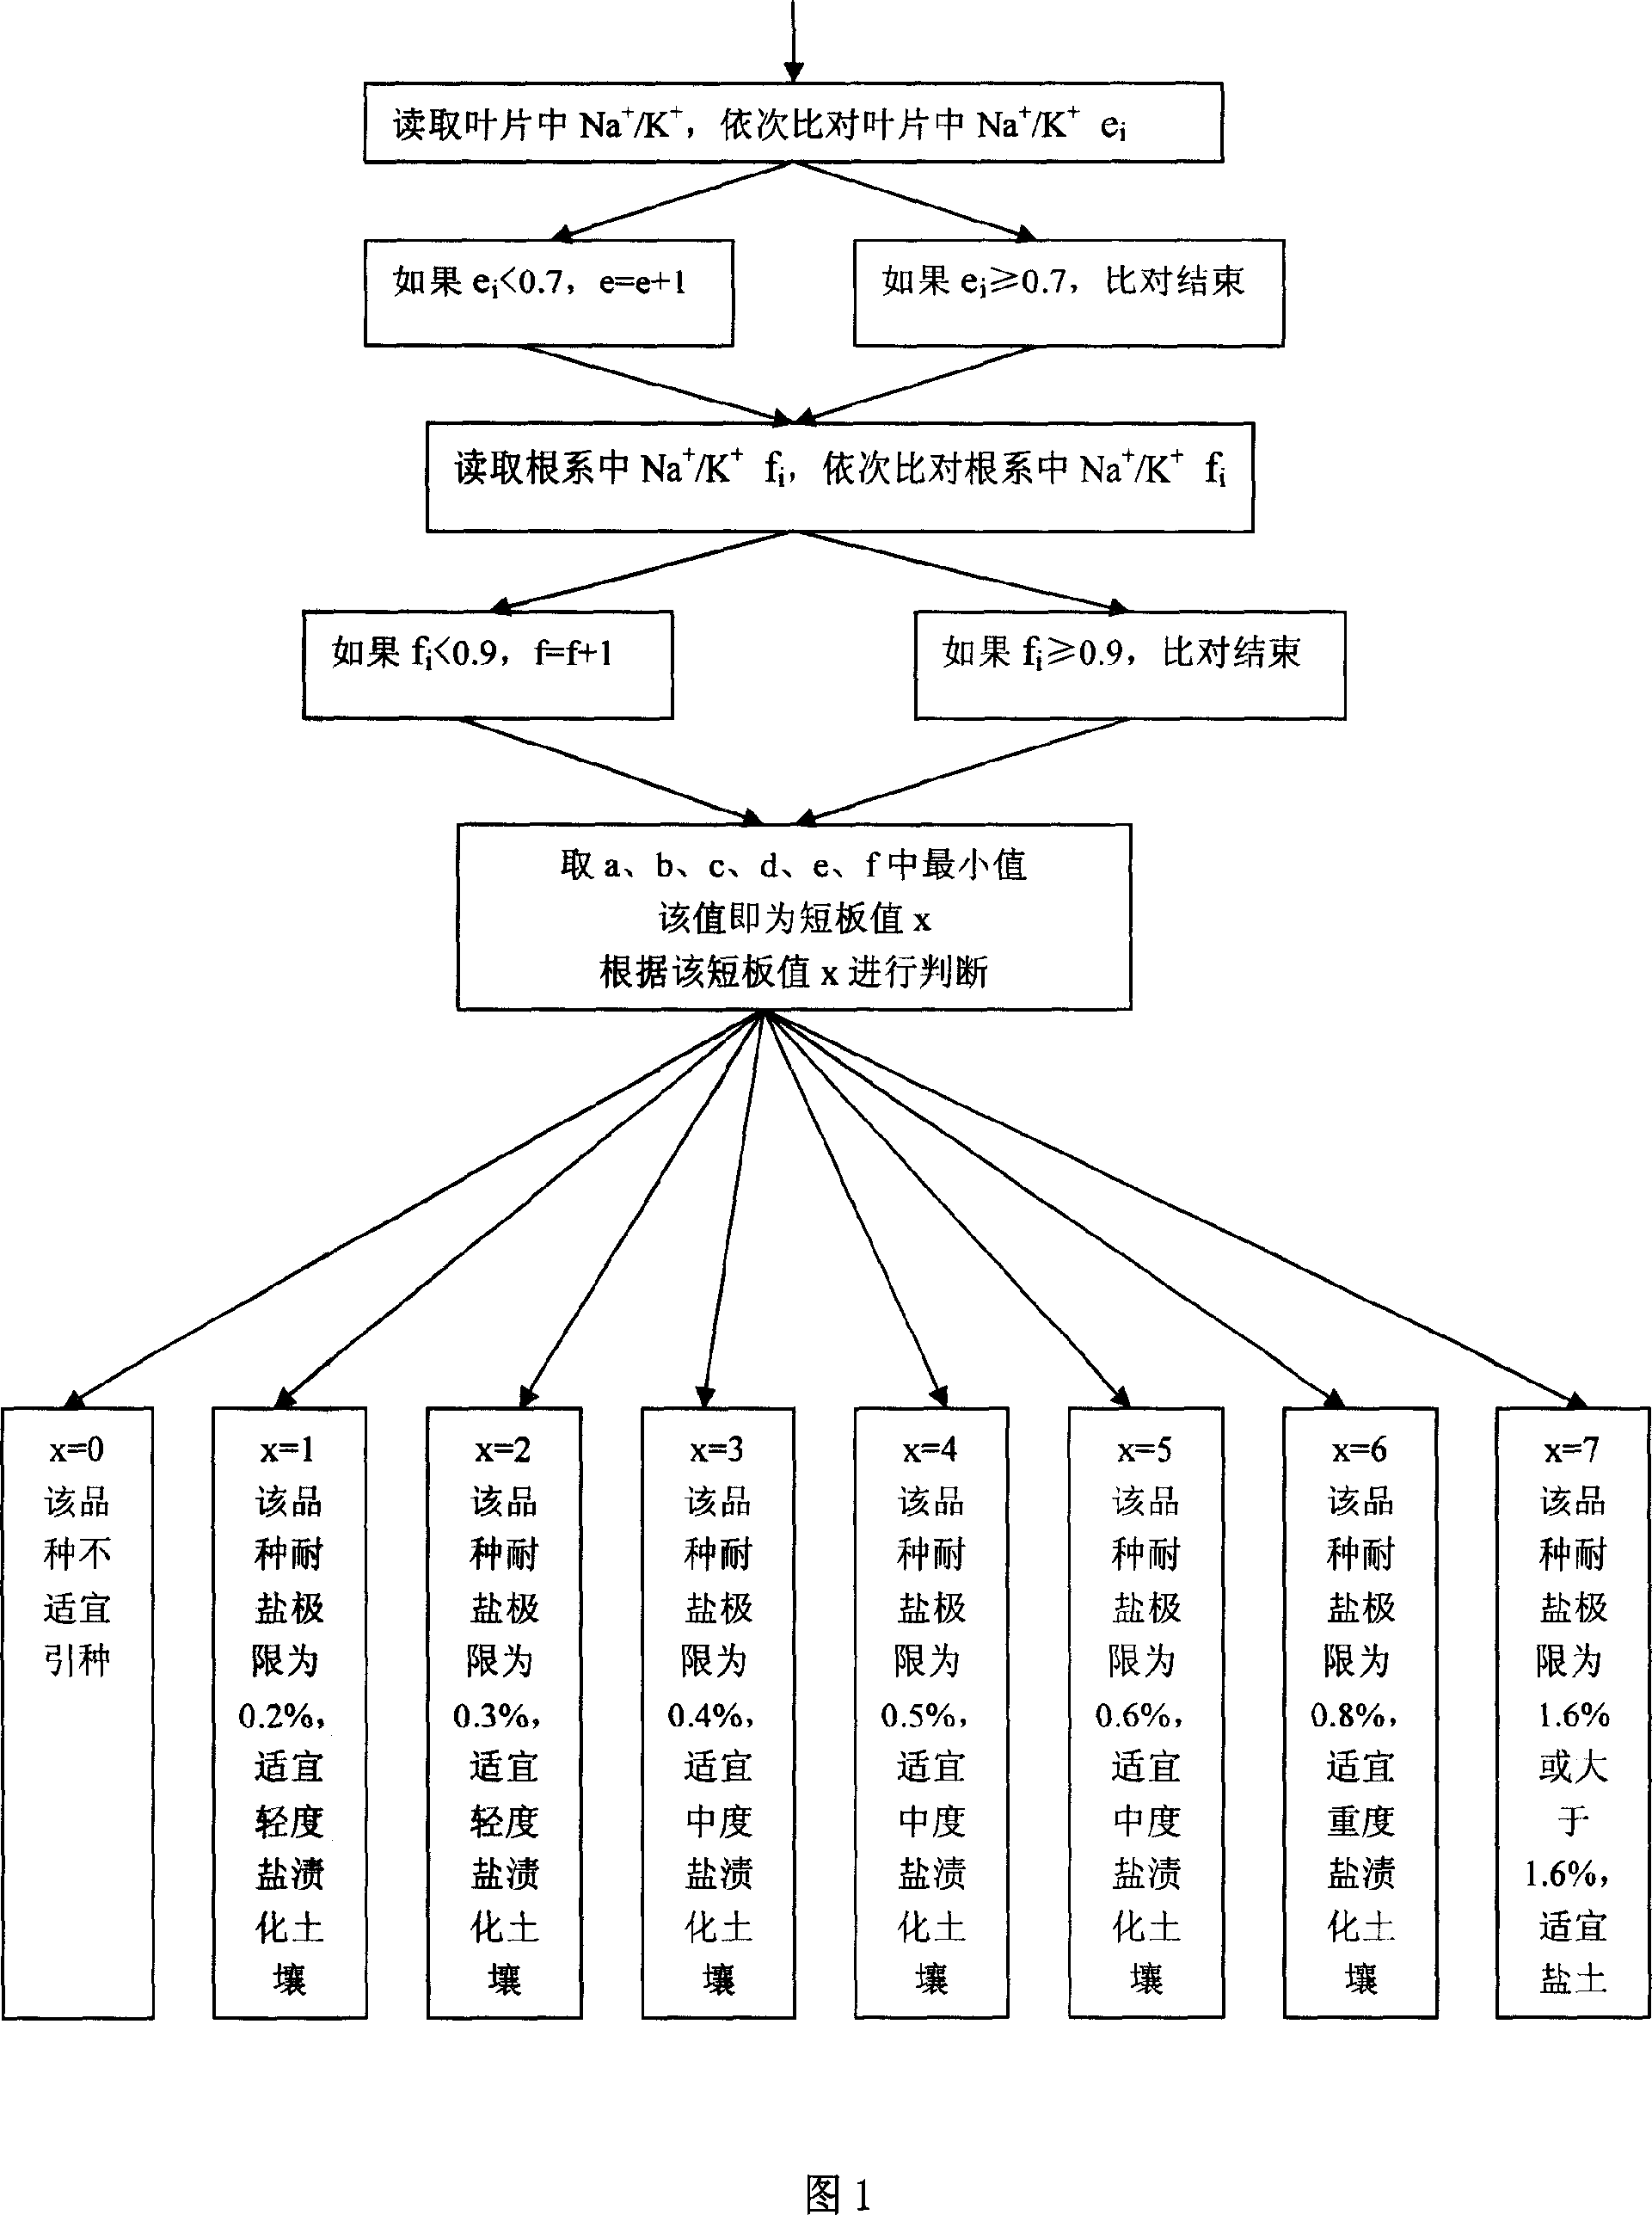 Computer estimation method for salt tolerance of non-halophyte herbaceous plant